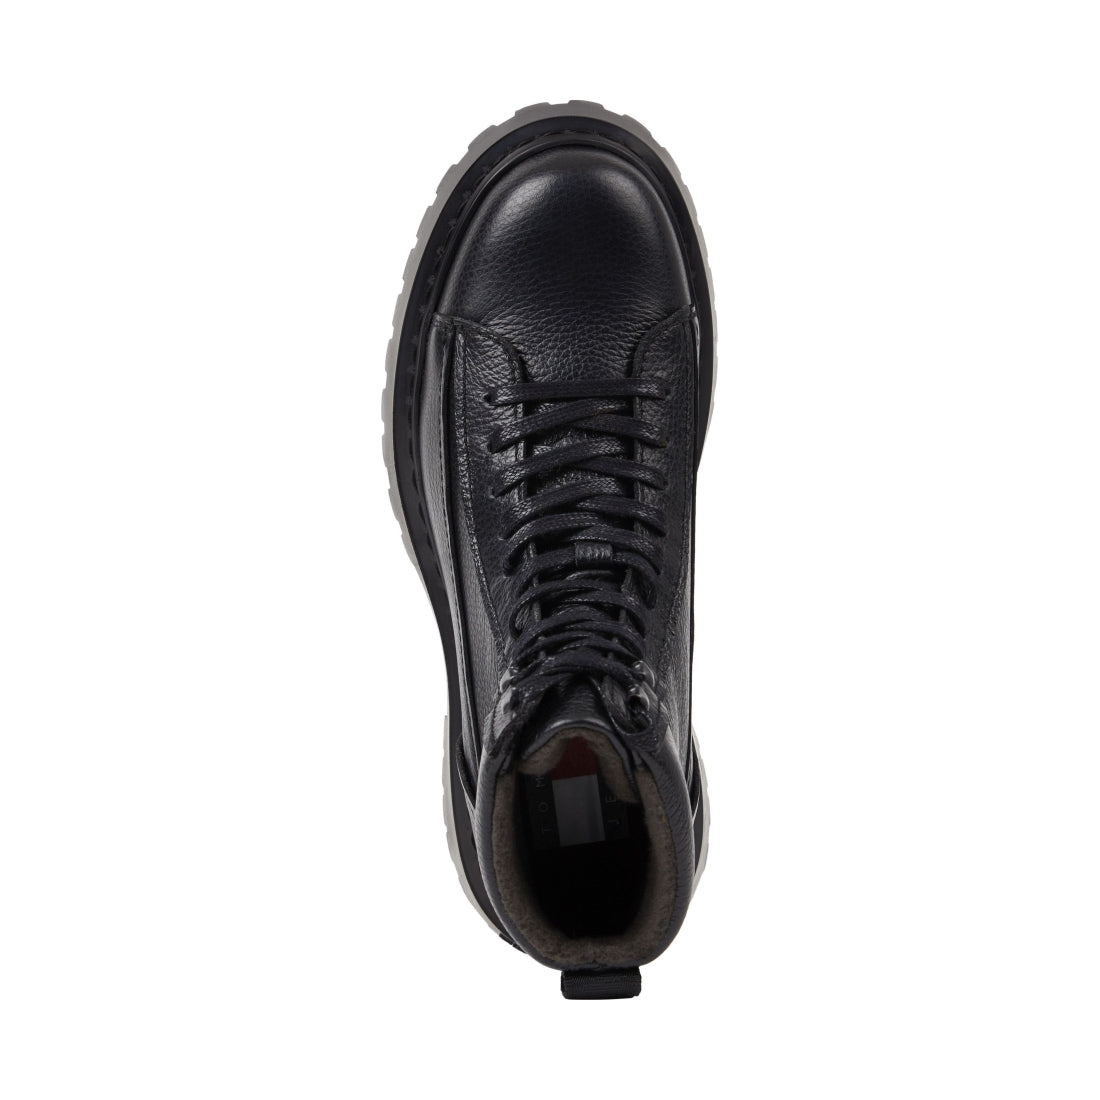 Tommy Jeans mens black warm lining boot | Vilbury London